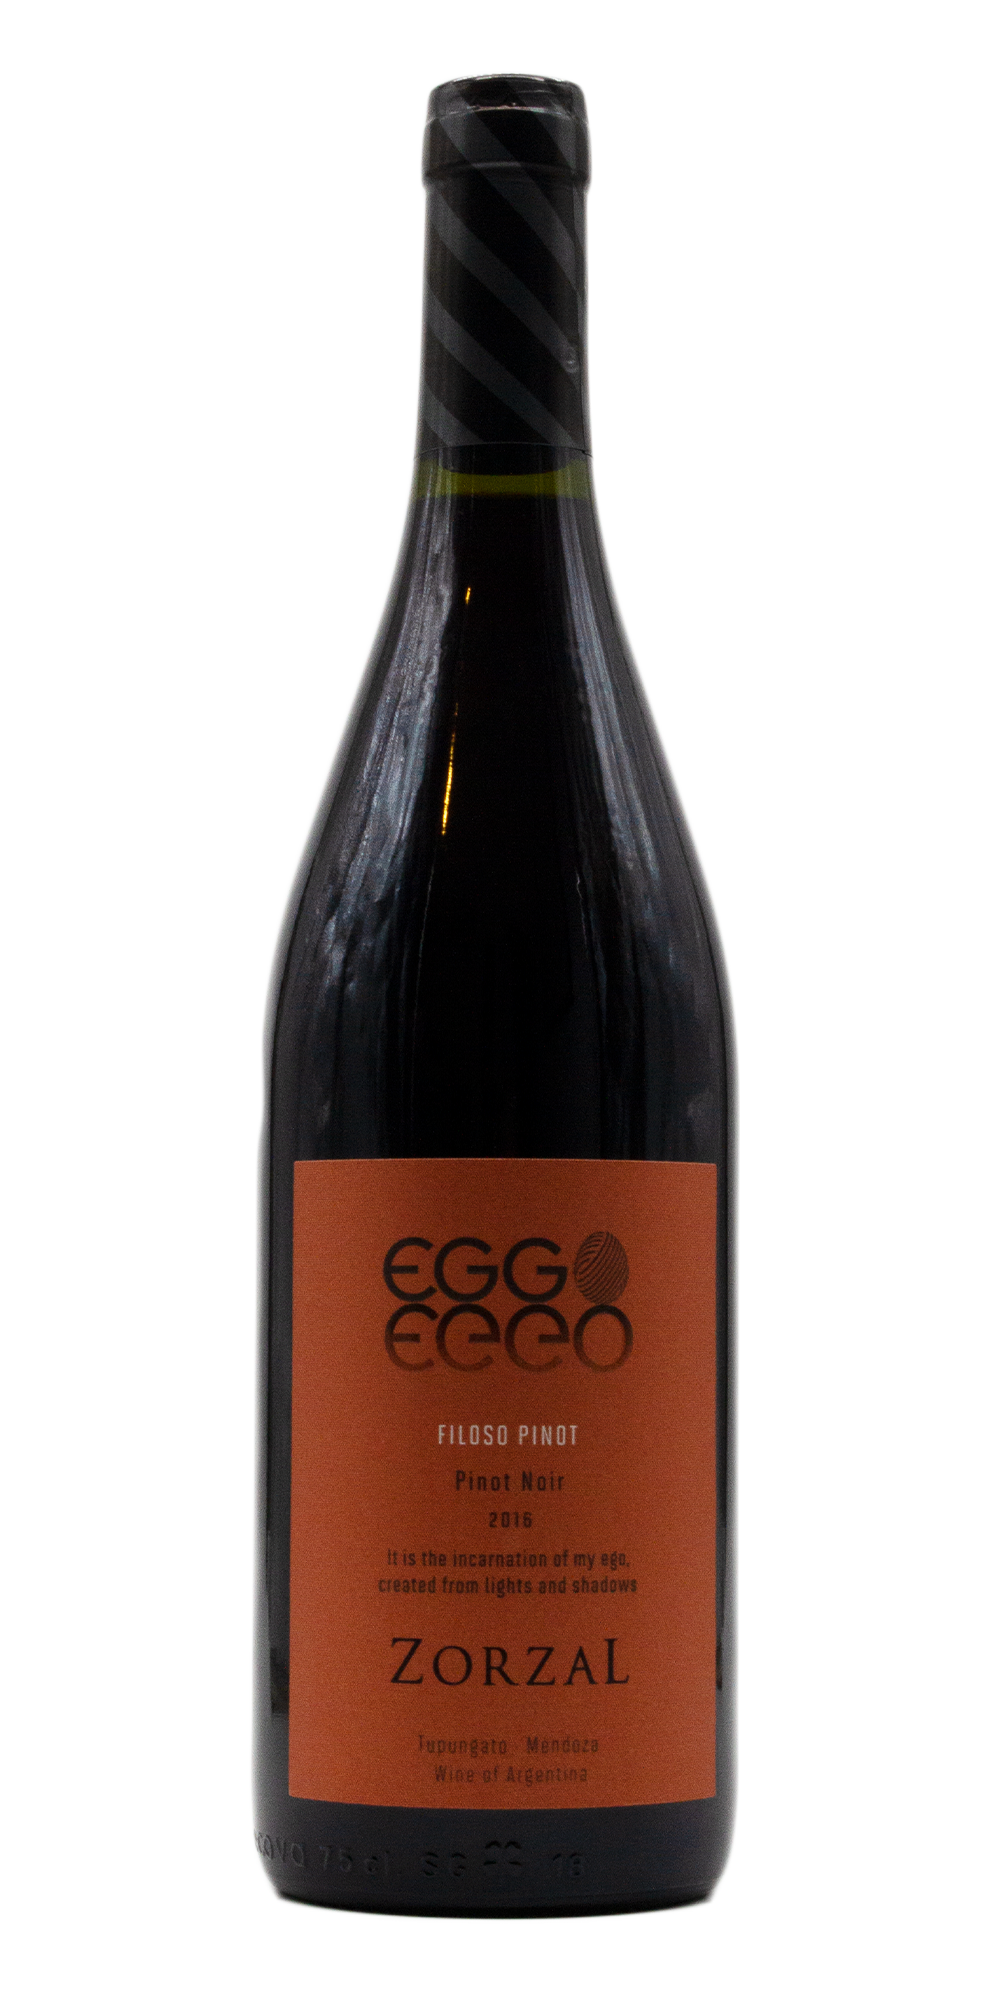 Eggo Filoso Pinot, 2016